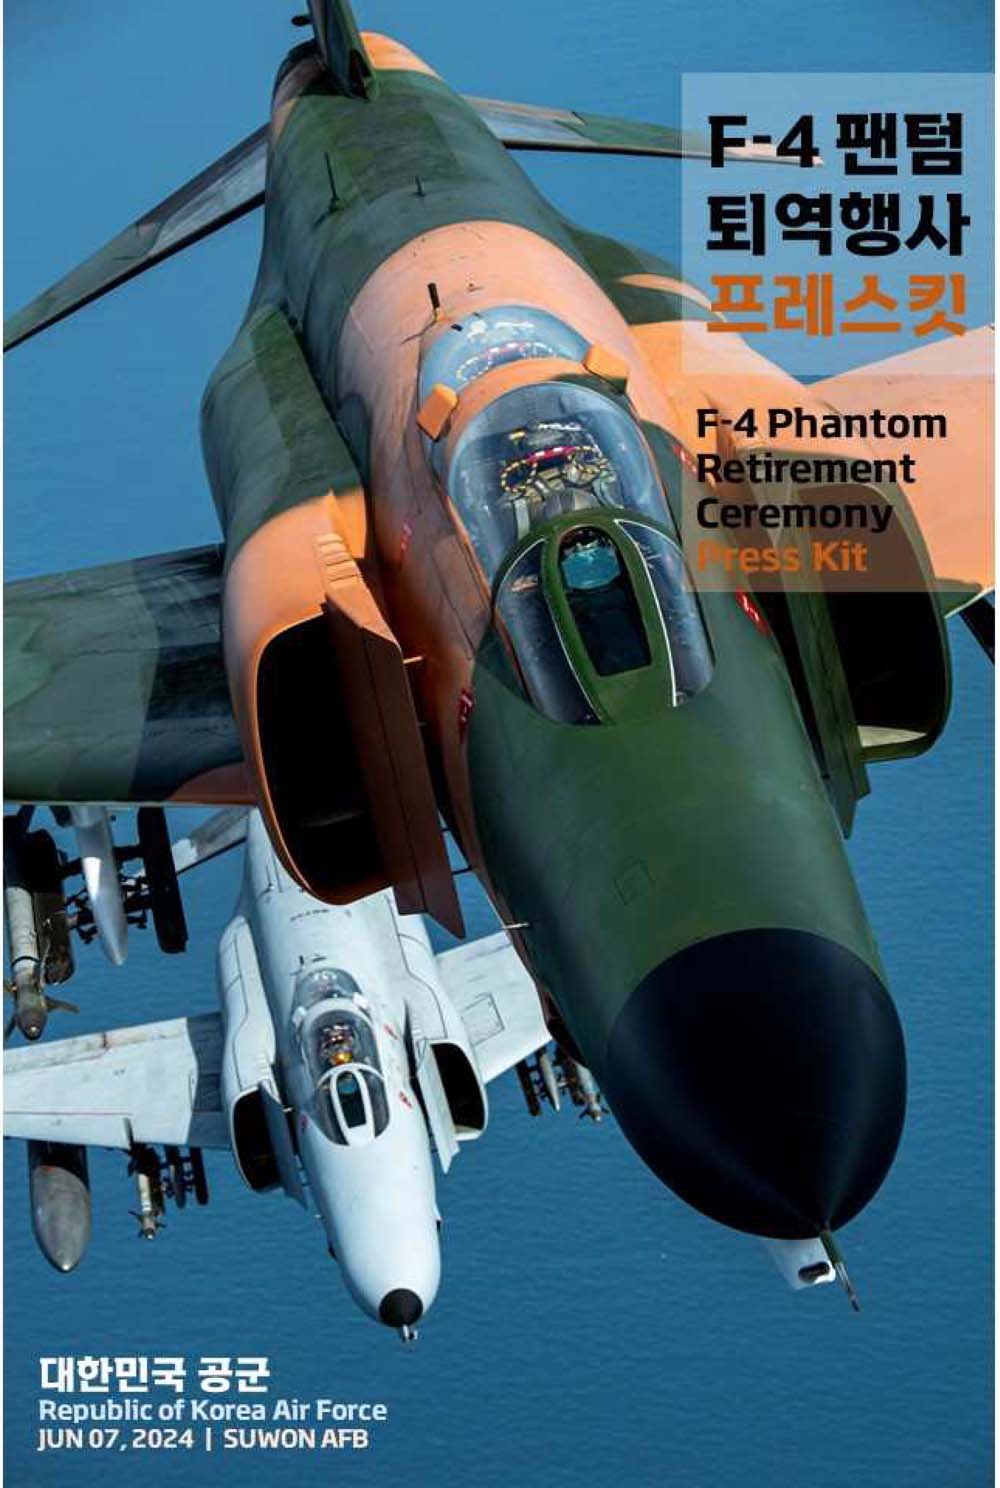 F-4 팬텀 프레스 킷(F-4 Phantom Press Kit).jpg